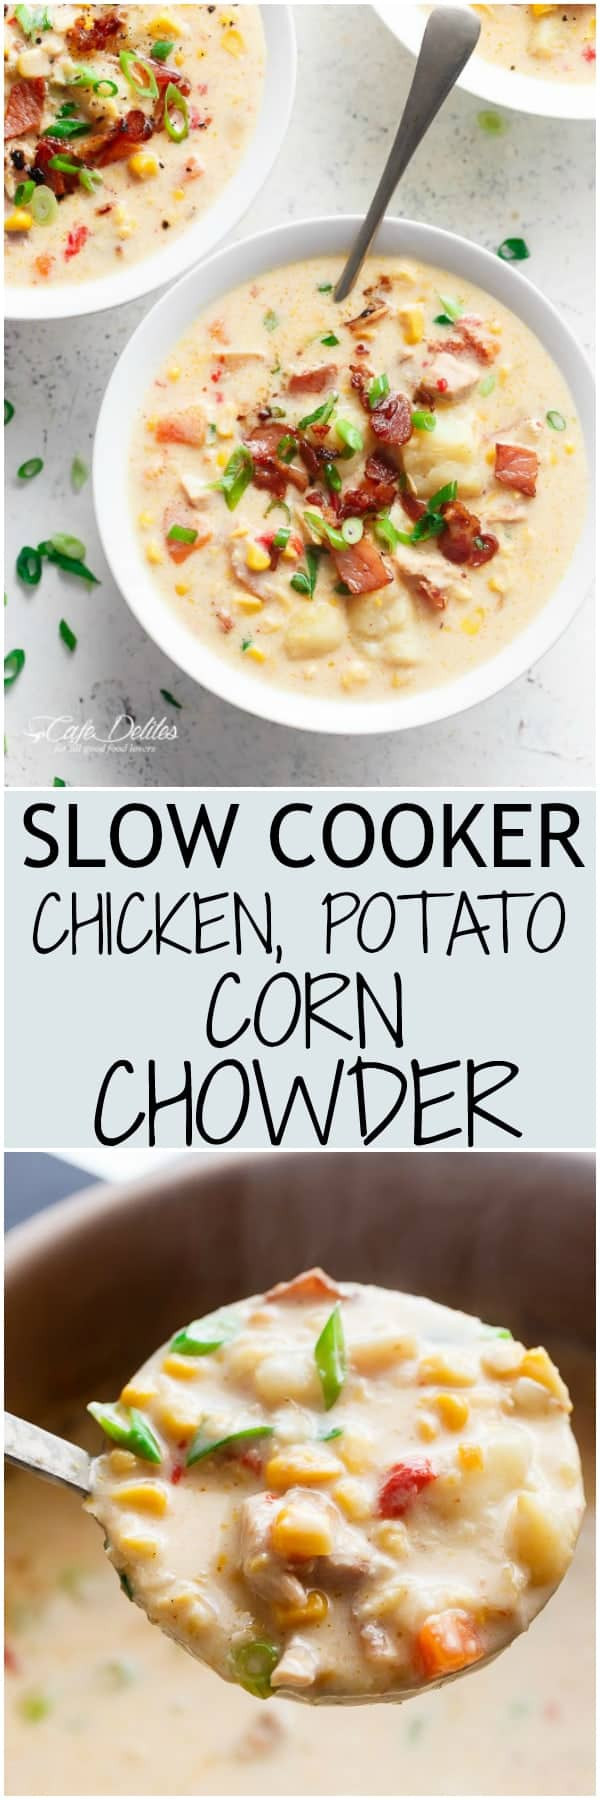 Corn Chowder Recipe Slow Cooker
 Slow Cooker Chicken Potato Corn Chowder Cafe Delites